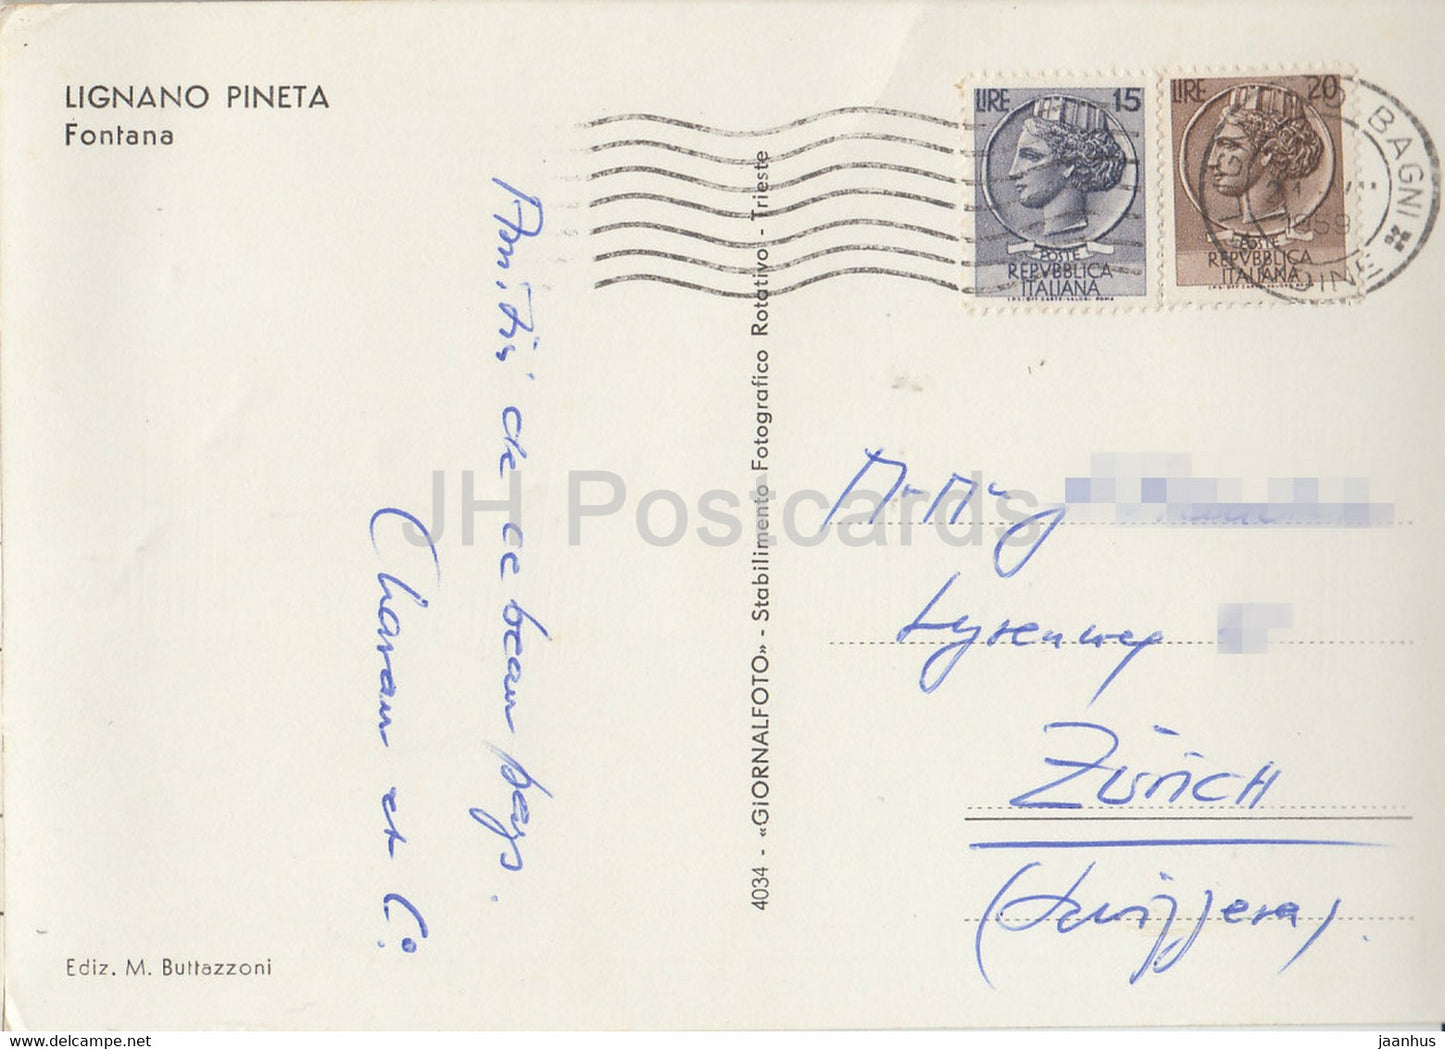 Lignano Pineta - Fontana - old postcard - 1959 - Italy - used